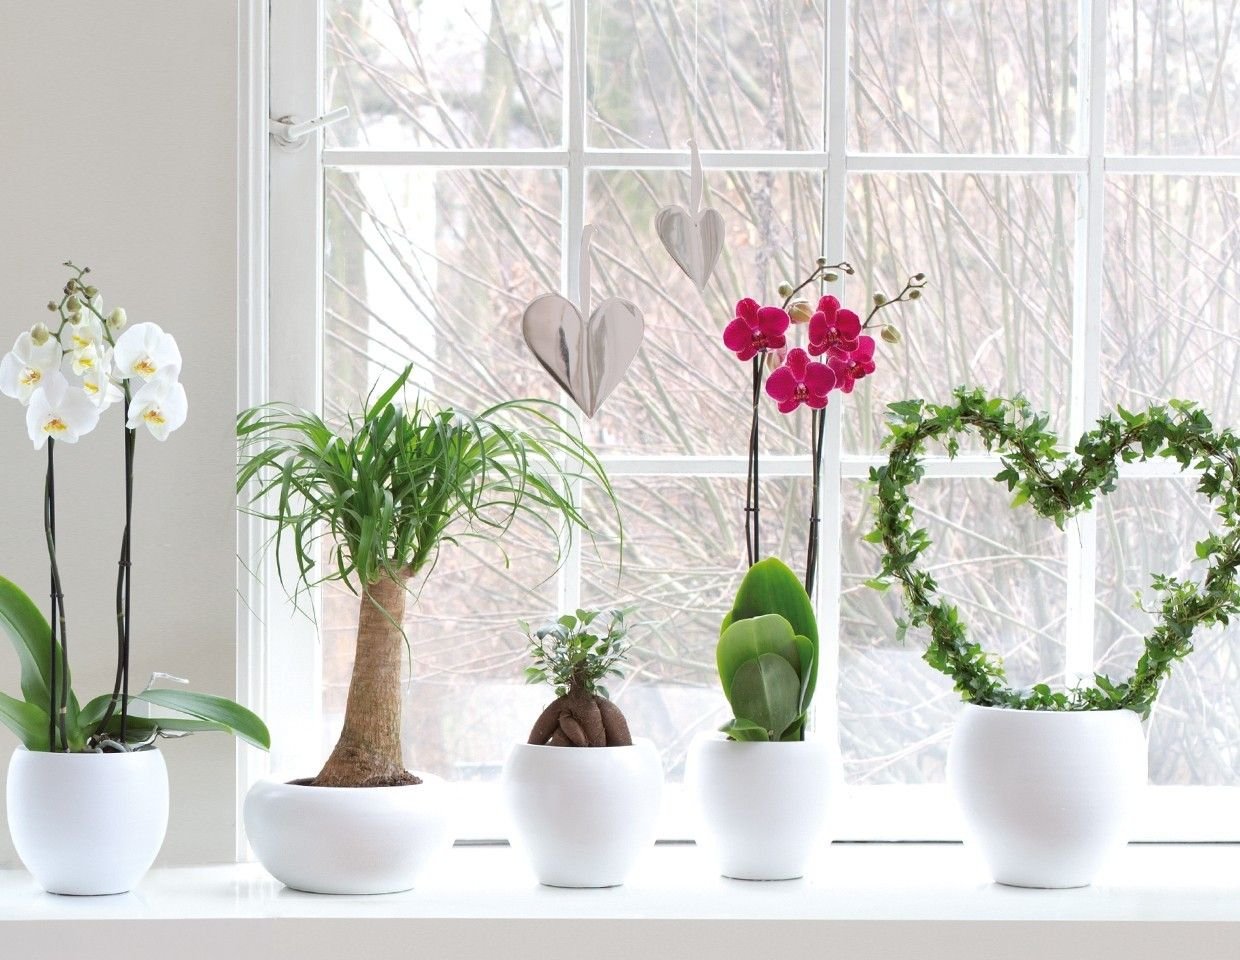 5 lucky charms among indoor plants